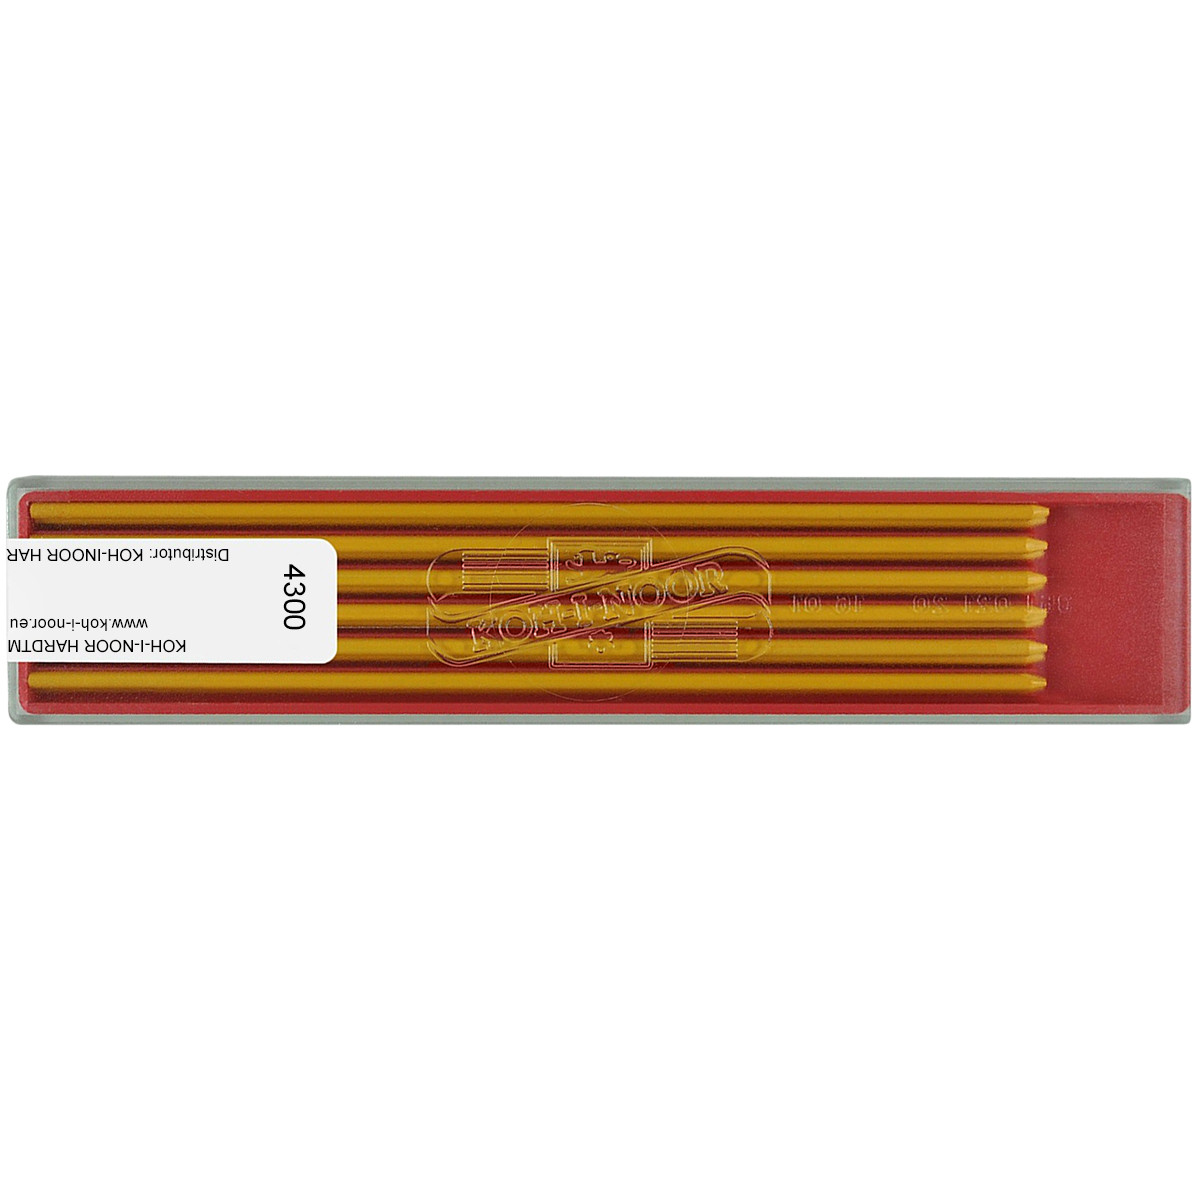 Koh-I-Noor 4300 Coloured Leads - 2.0mm x 120mm (Plastic Case of 12)